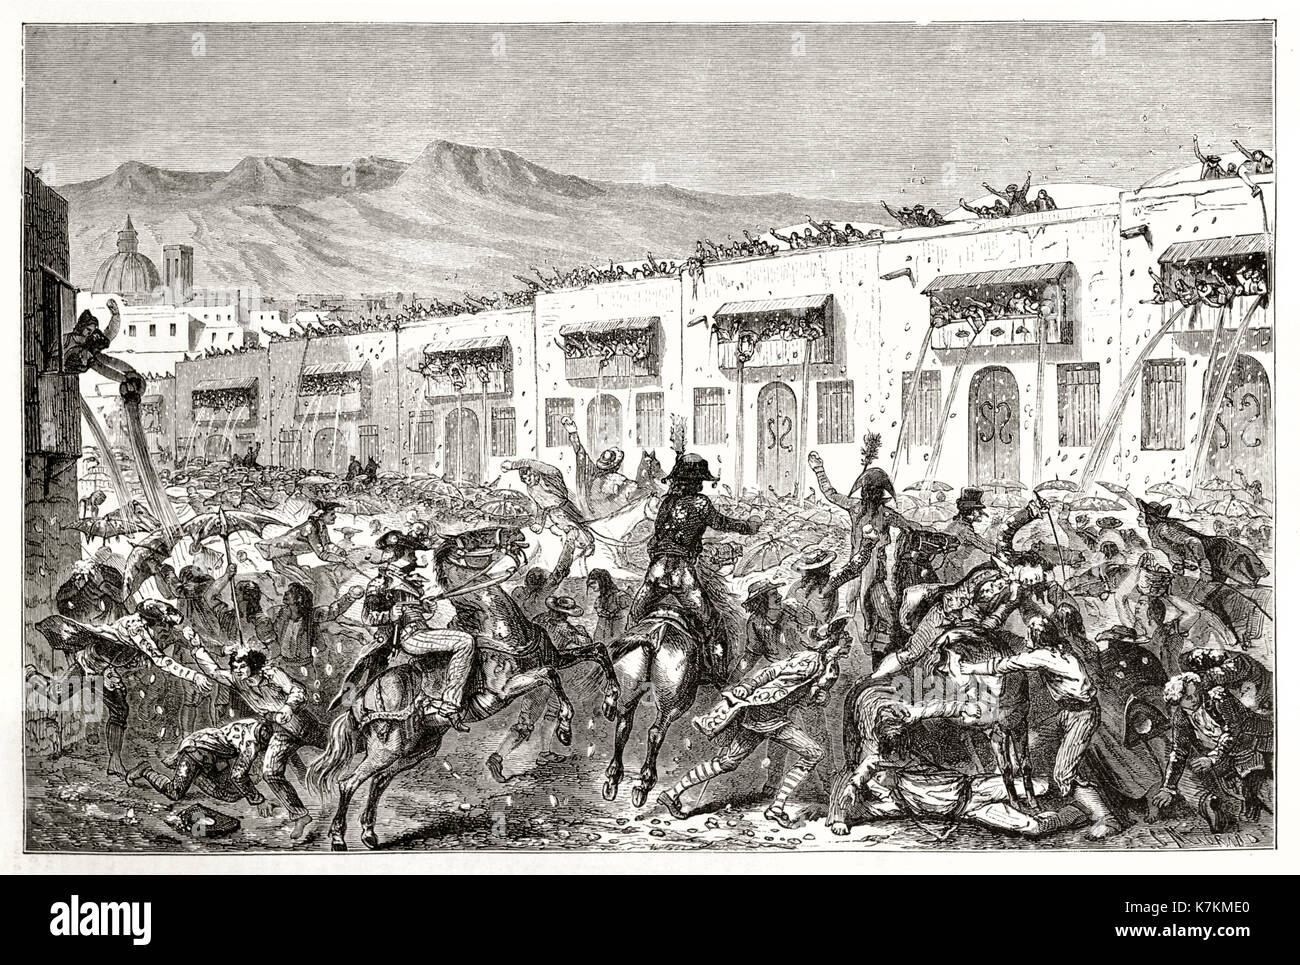 Old illustration of Mardi Gras in Arequipa, Peru. By Riou, publ. on Le Tour du Monde, Paris, 1862 Stock Photo